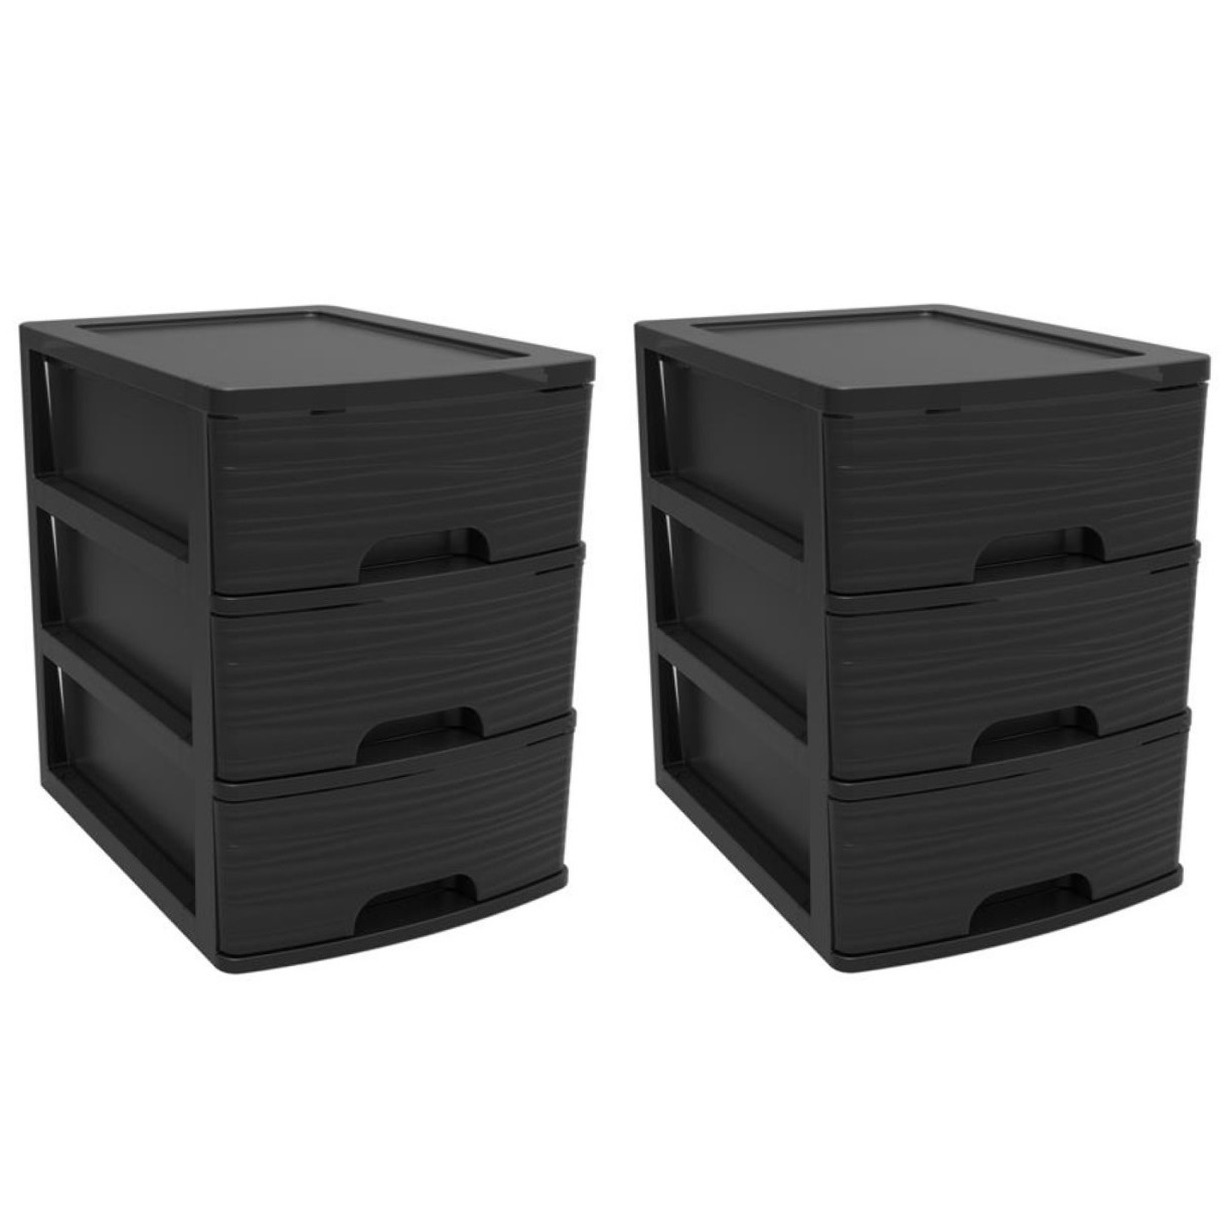 2x stuks ladenkast-bureau organizers zwart A5 3x lades stapelbaar L27 x B36 x H35 cm